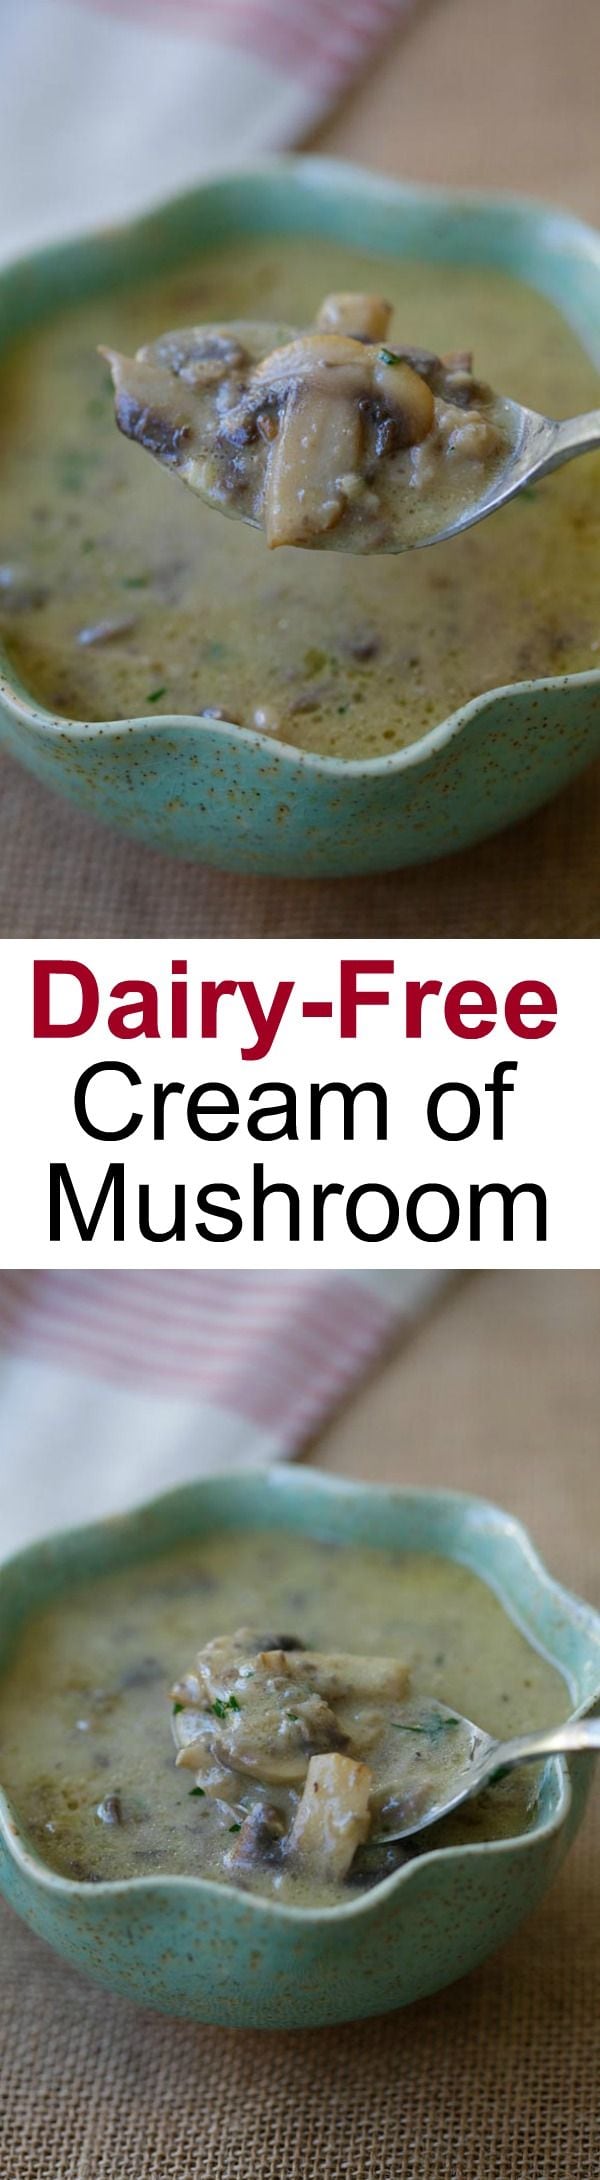 Dairy-Free Cream of Mushroom – easy and lighter cream of mushroom recipe using Silk Almond Milk. 100% dairy-free, gluten-free and plant-based | rasamalaysia.com